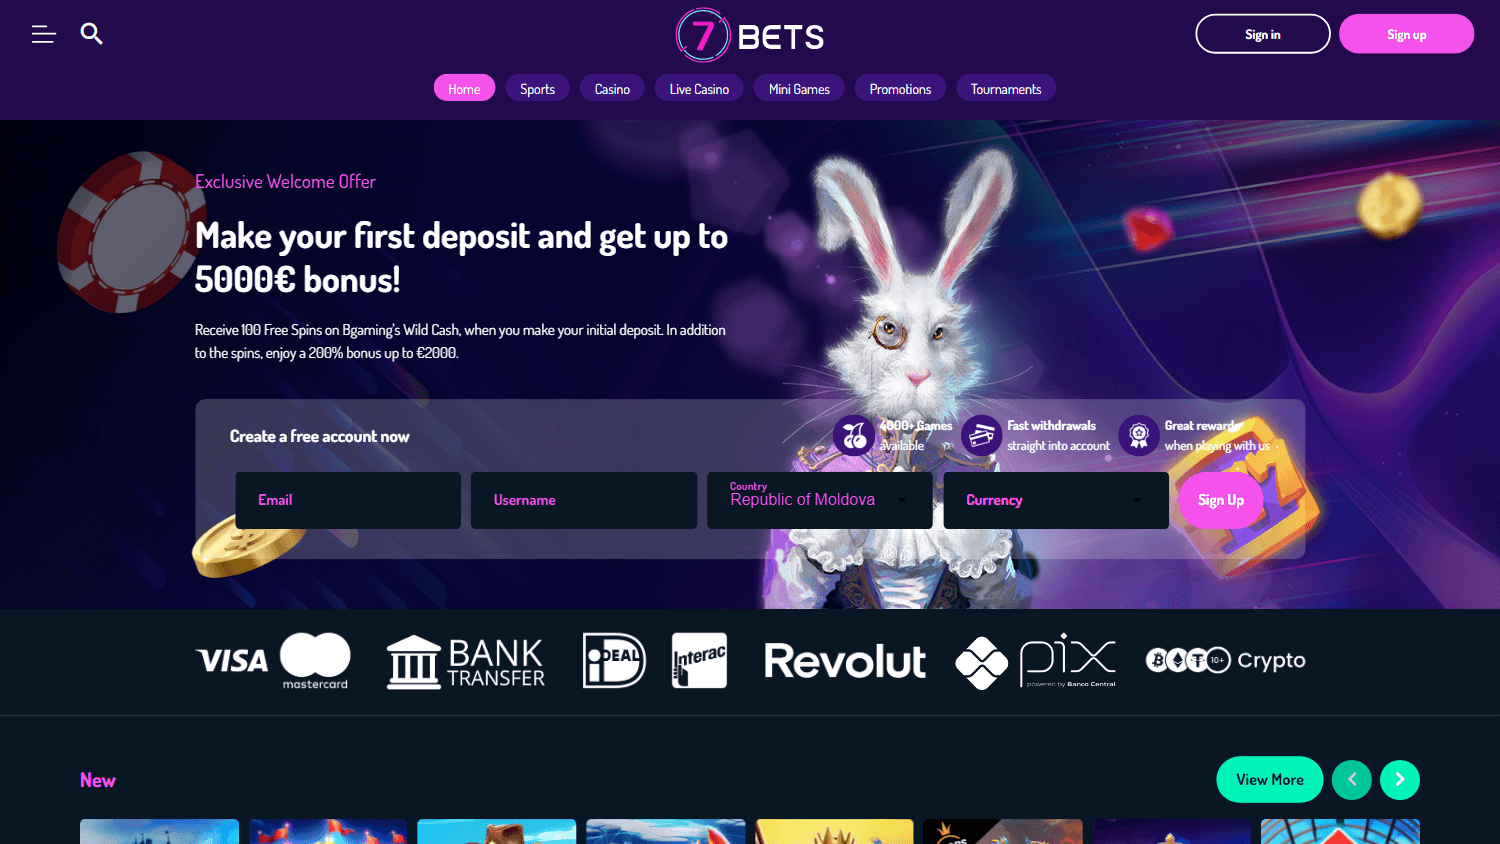 7bets.io_casino_homepage_desktop